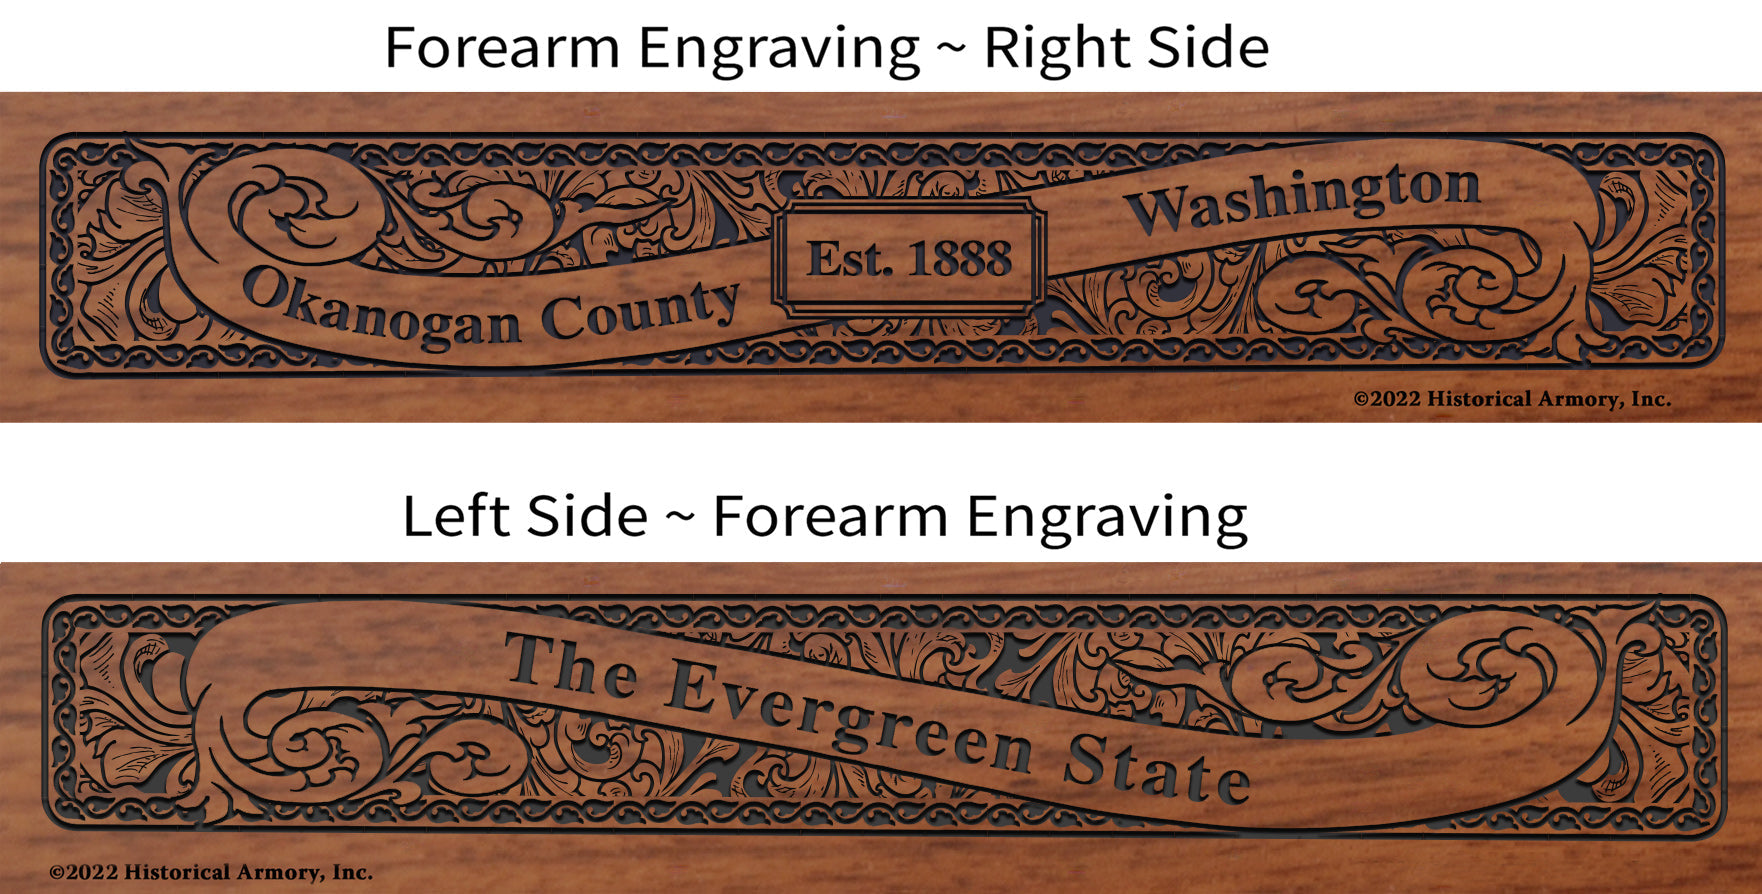 Okanogan County Washington Engraved Rifle Forearm